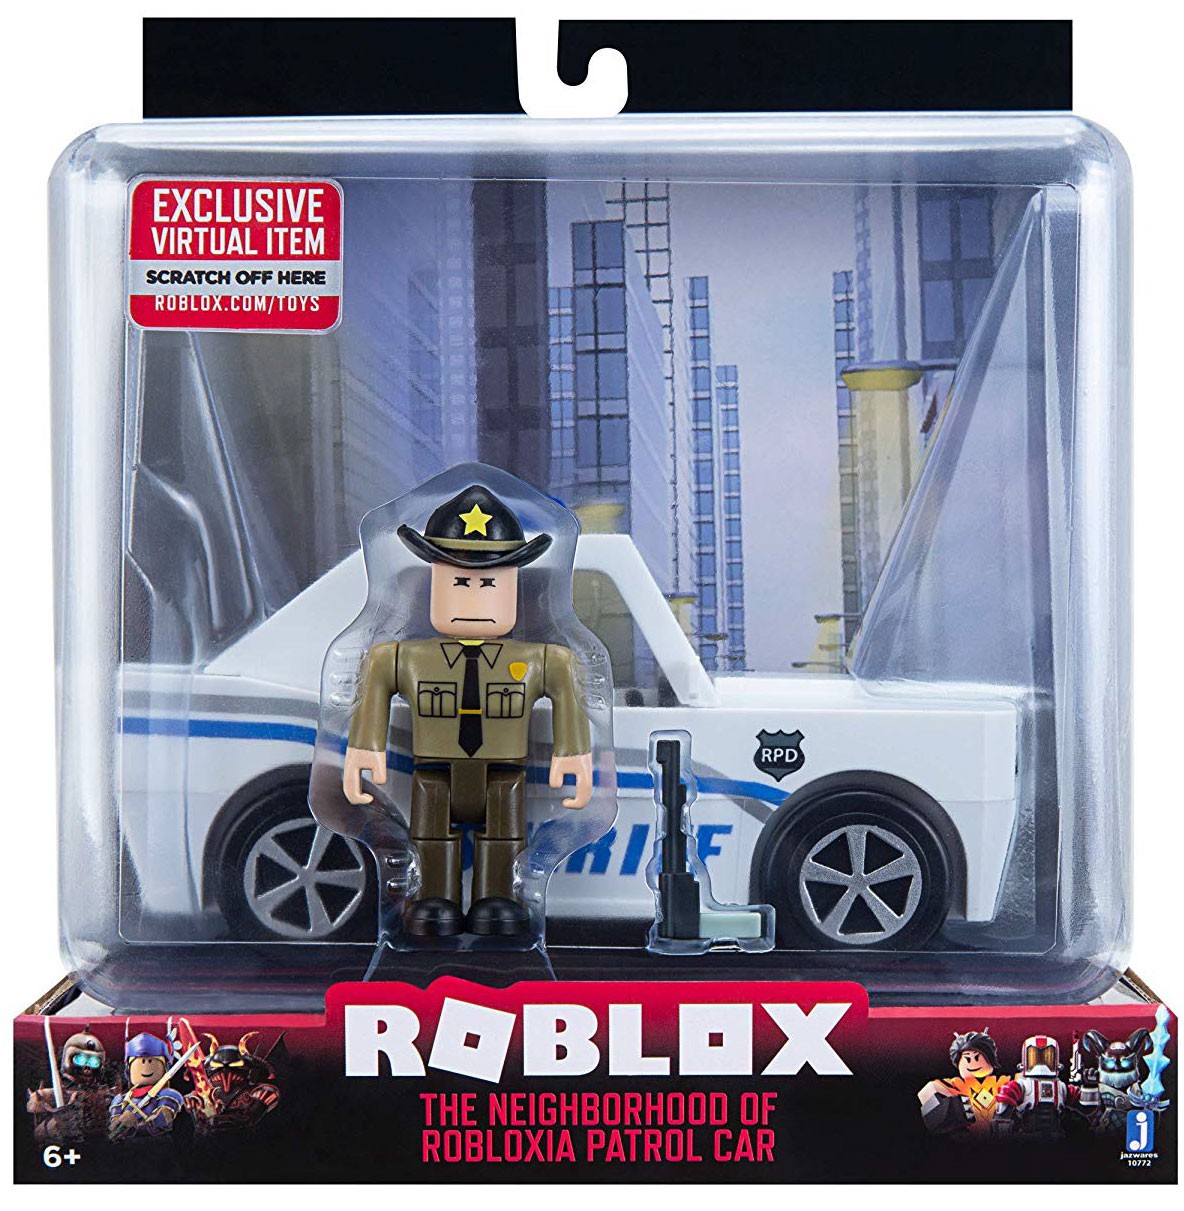 Neighborhood Of Robloxia Patrol Car Amp Sheriff Action Figure Amp Vehicle 681326107729 Ebay - 10772 neighborhood robloxia patrol